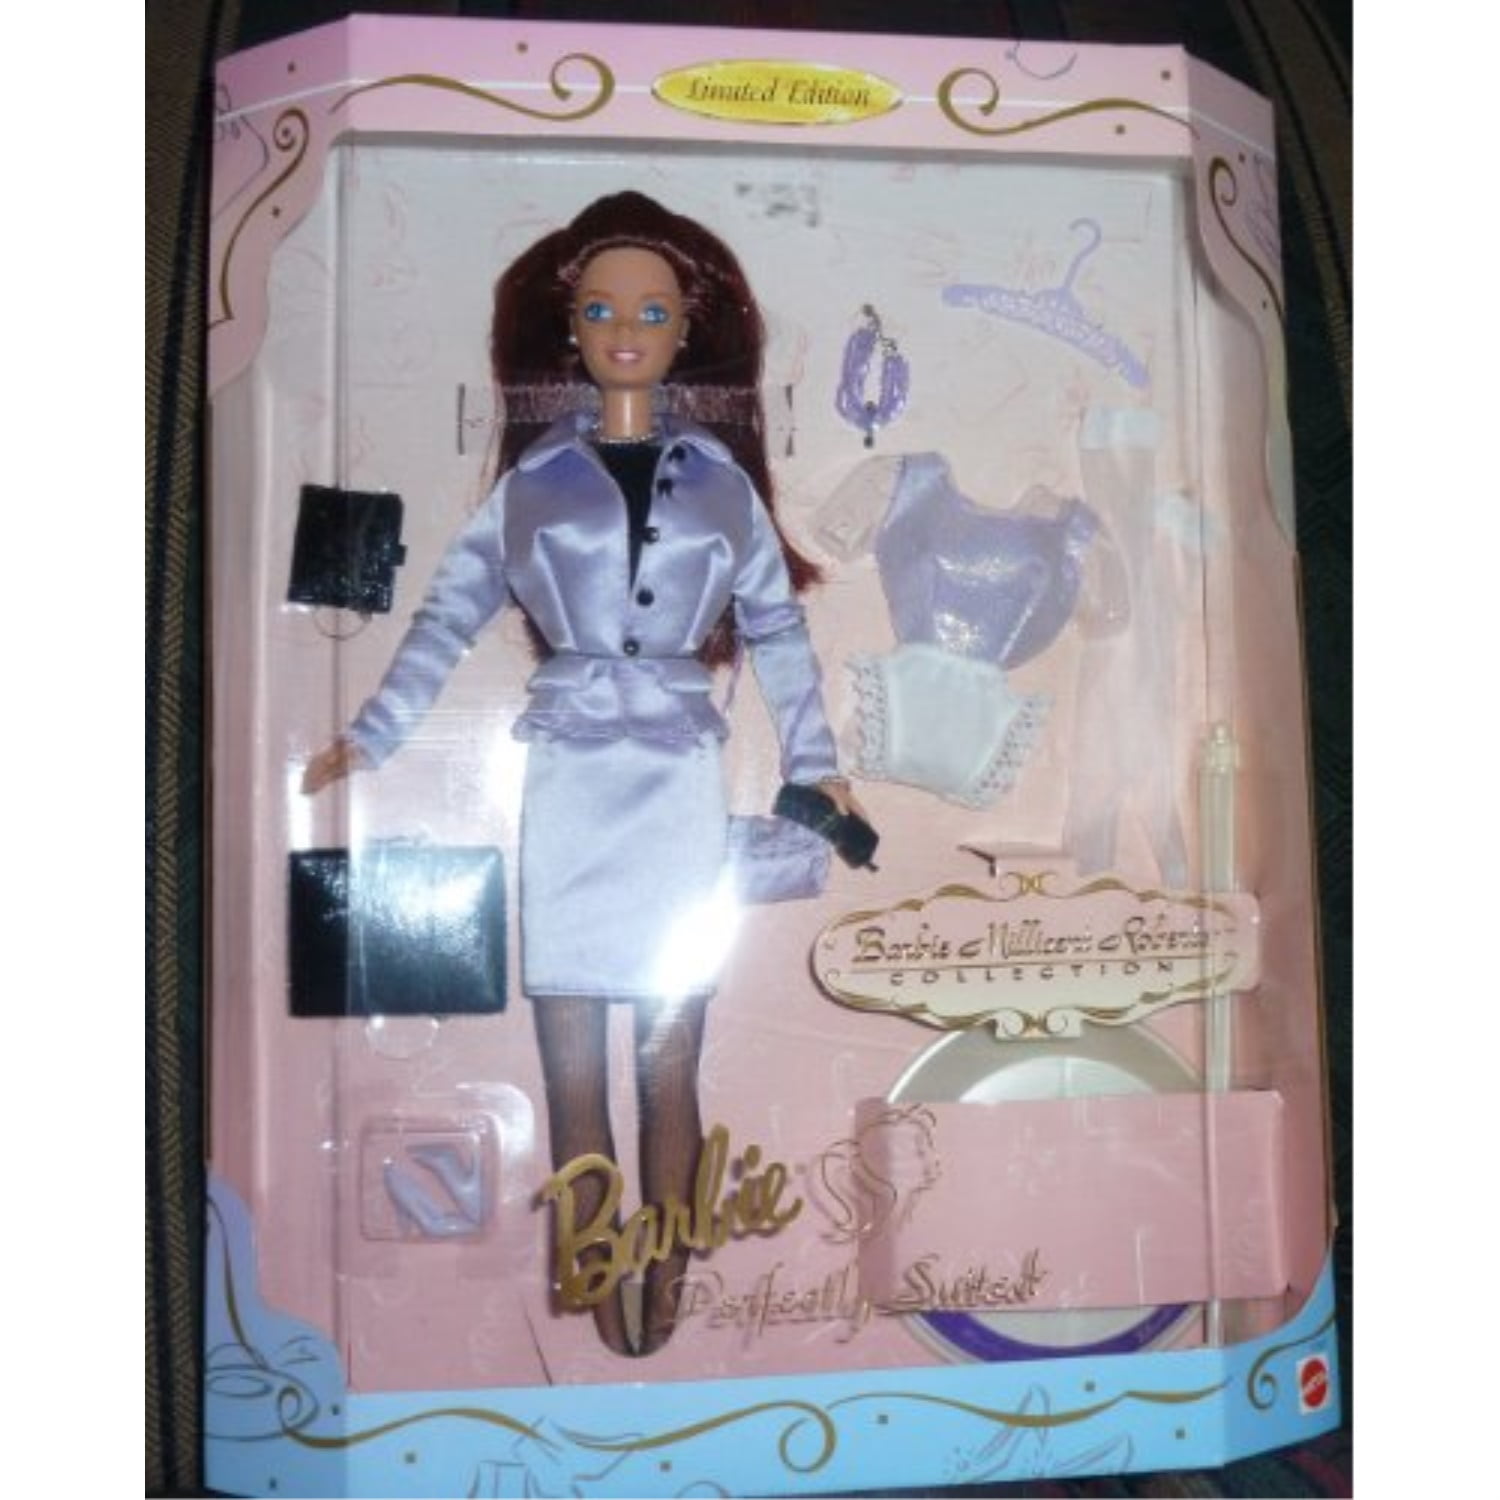 Barbie Millicent Roberts Collection City Slicker NRFB 17570 Mattel 1997 for sale online